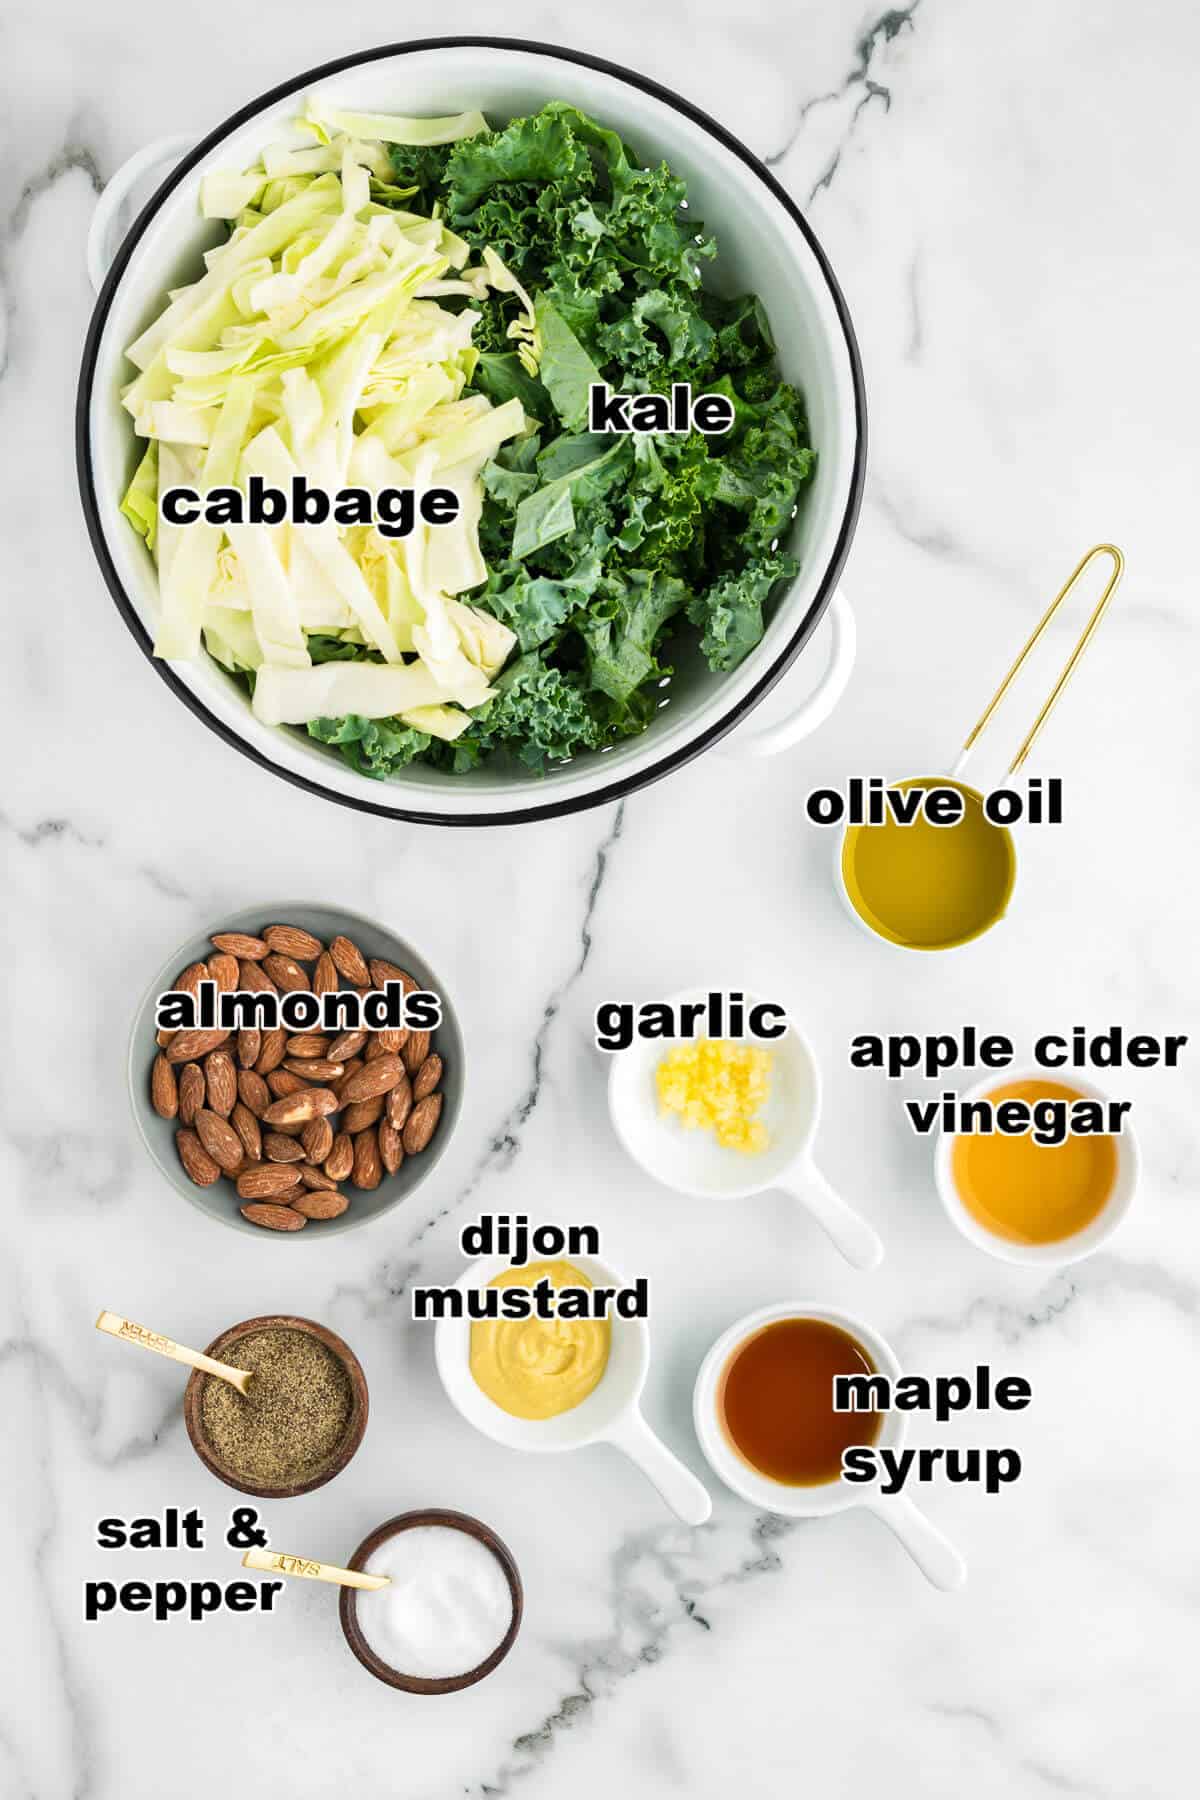 Ingredients to make Chick-Fil-A copycat Kale Crunch Salad